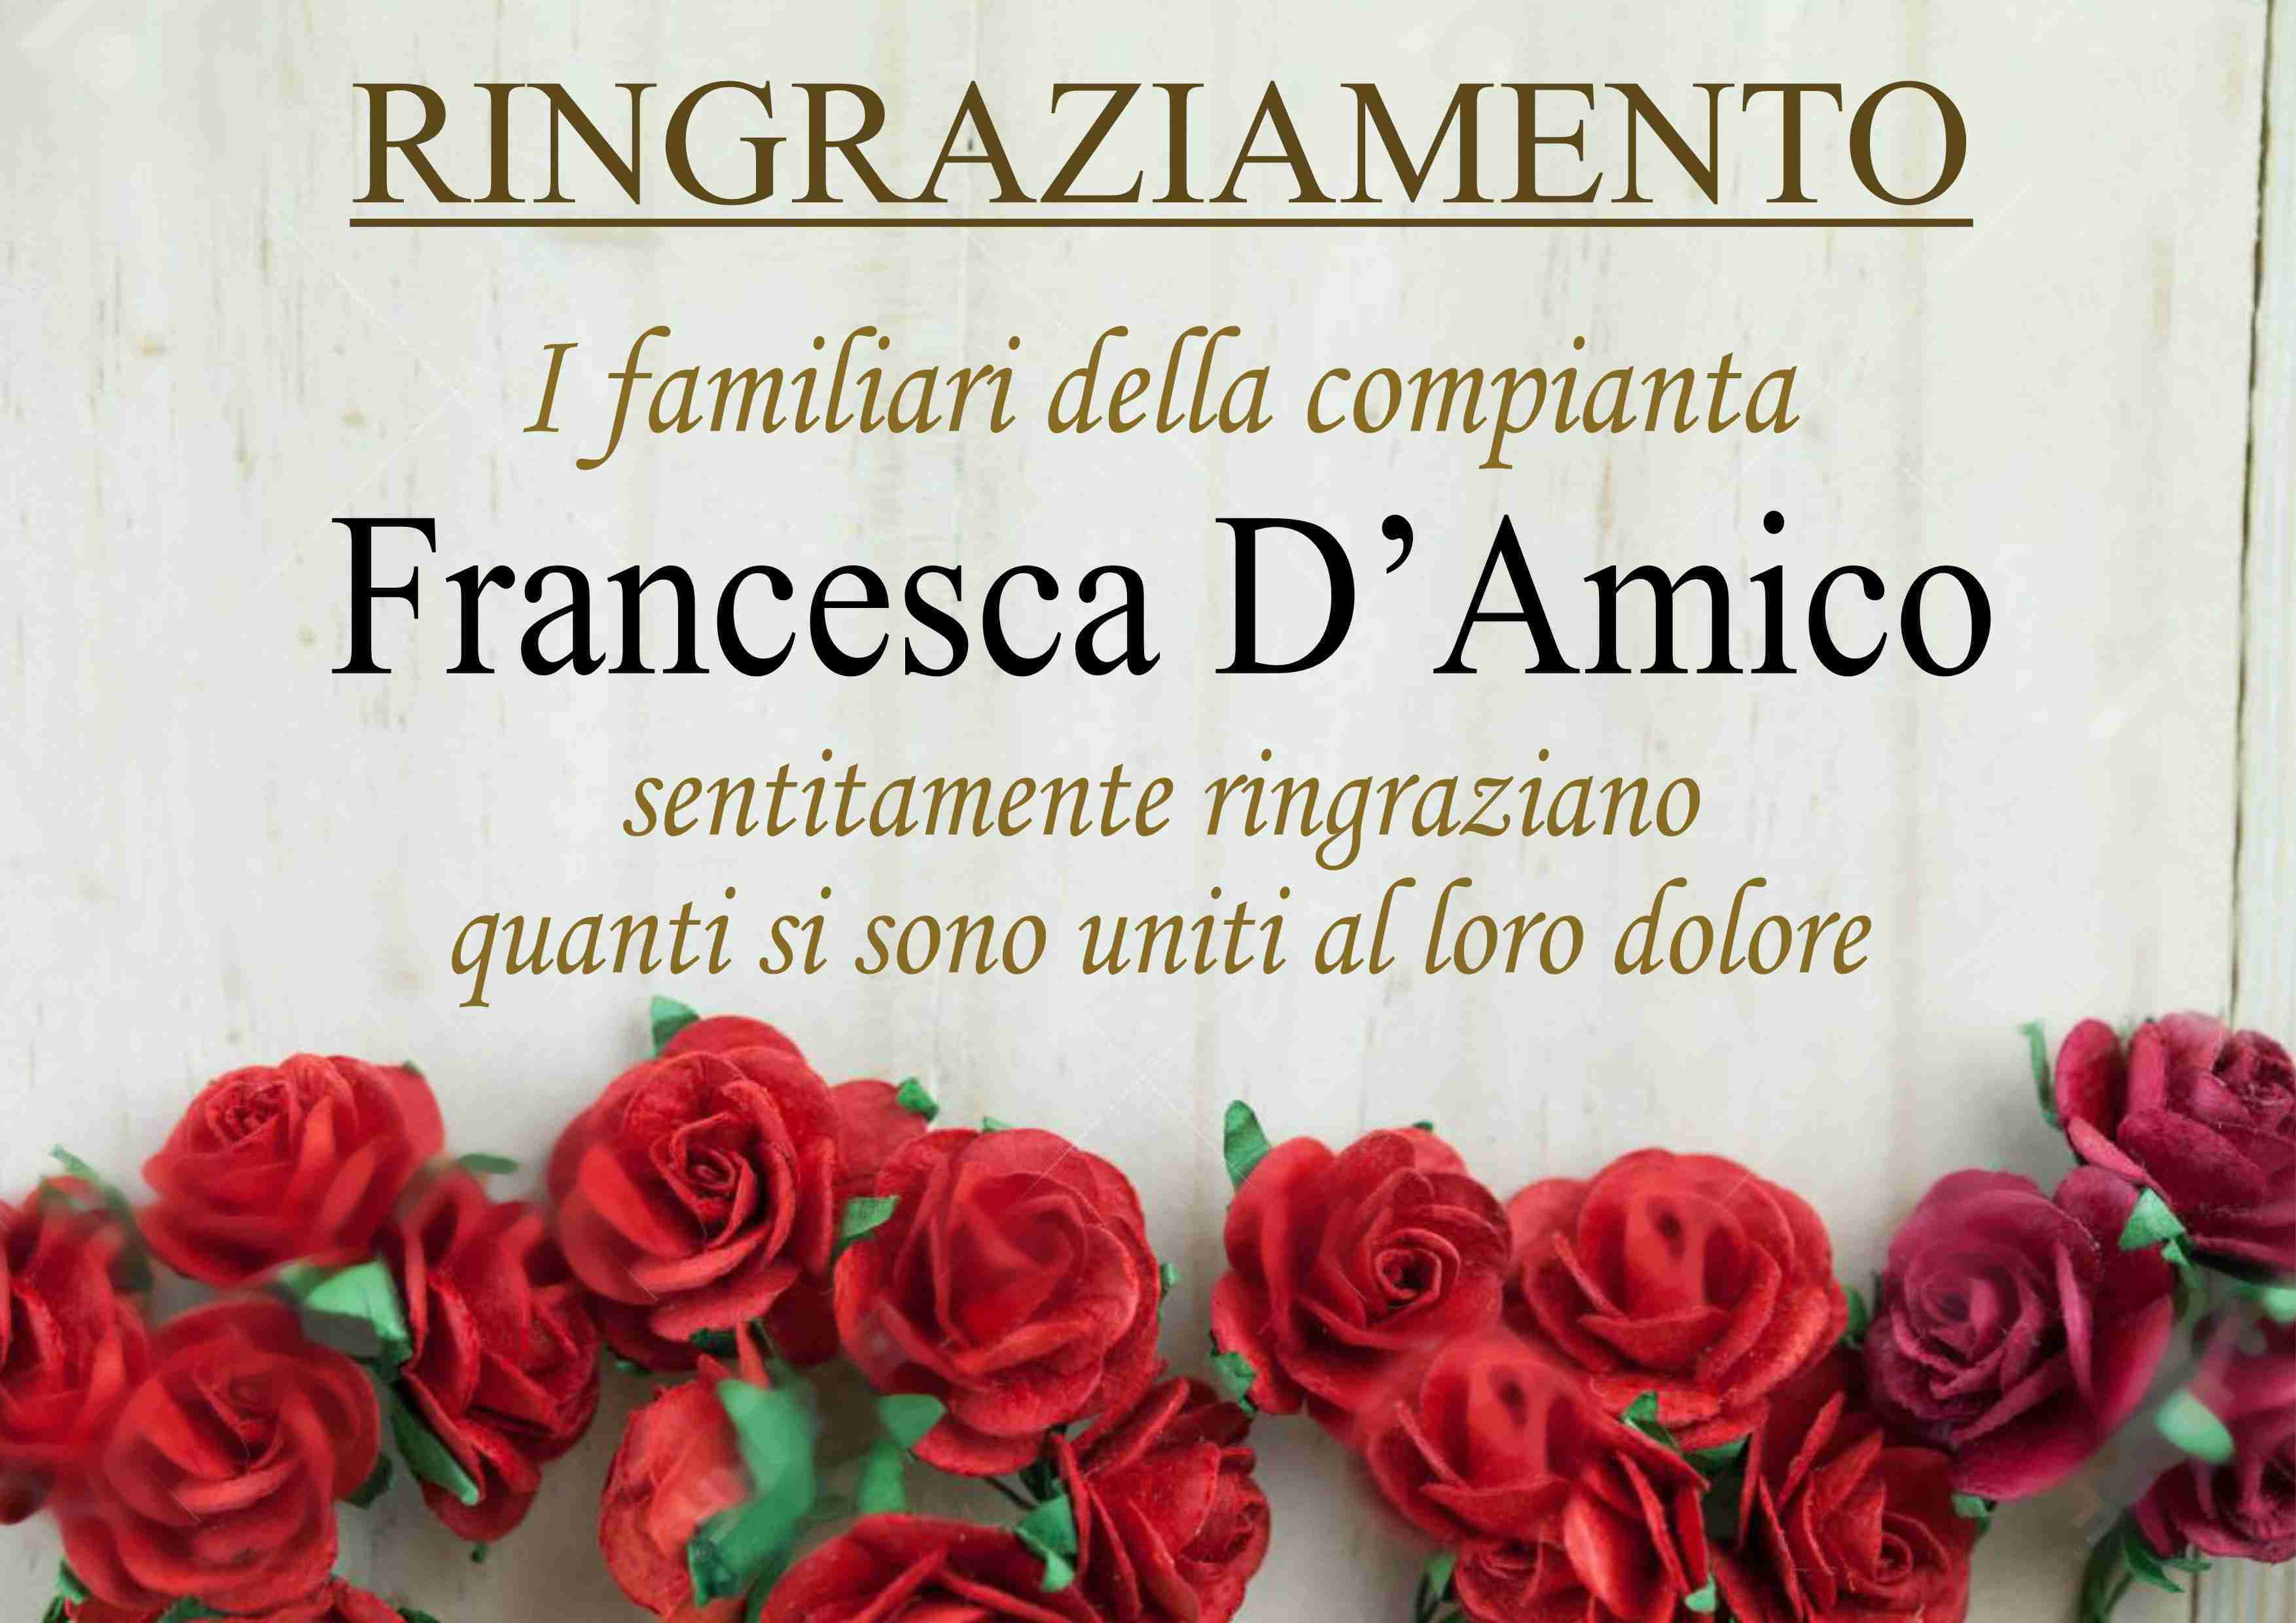 Francesca D'Amico